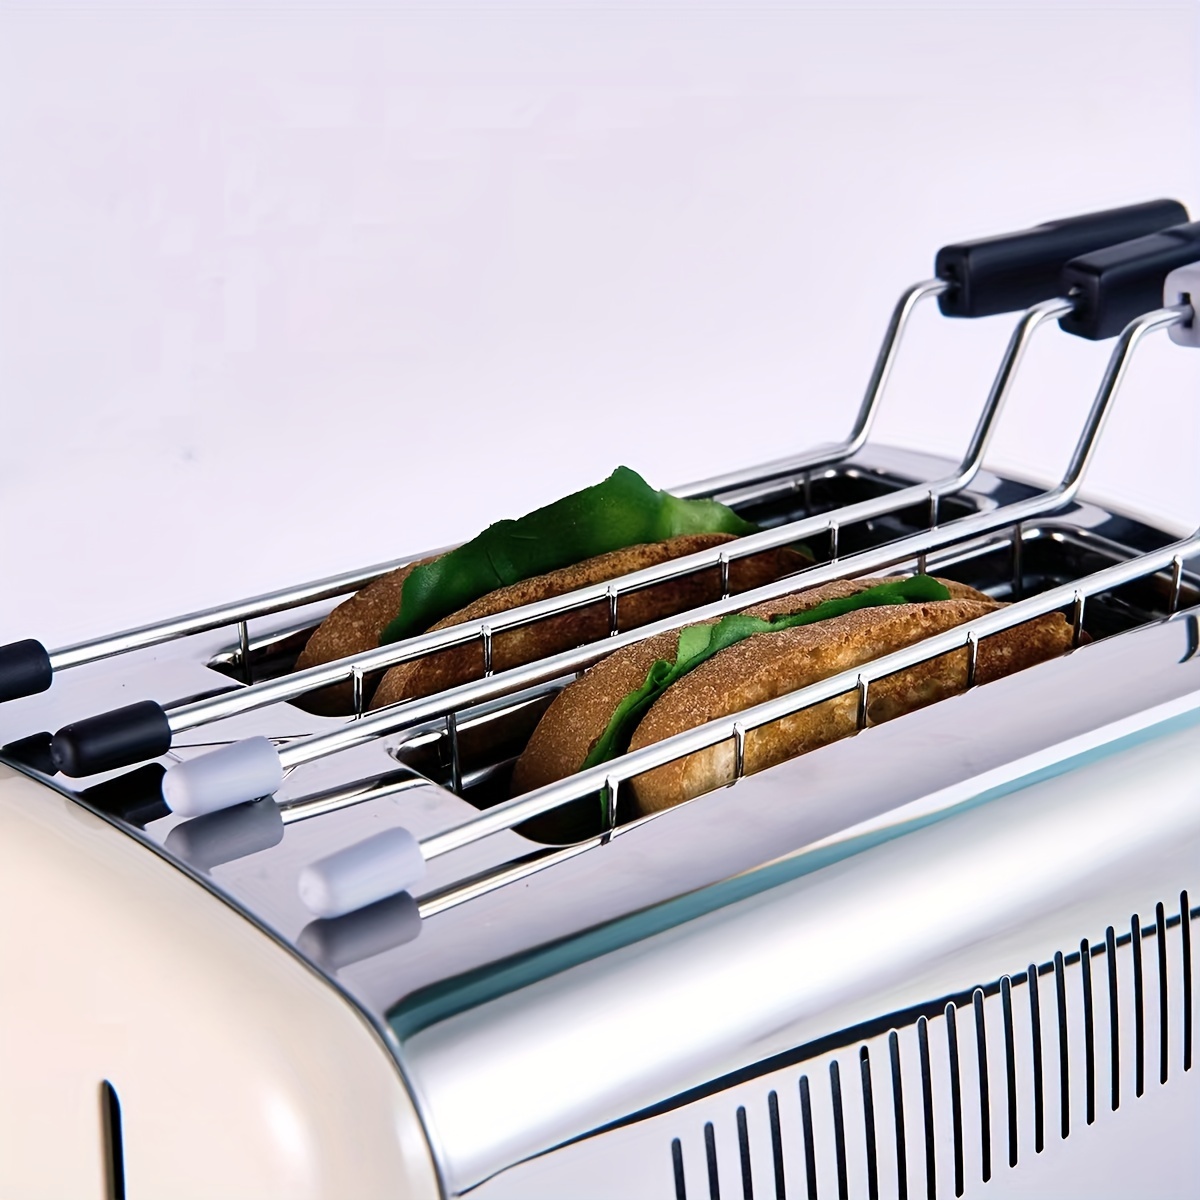 Stainless Steel Sandwich Holder Cage Warming Rack Attachment Toaster  Accessory Kitchen Utensils Anti-scalding Handles